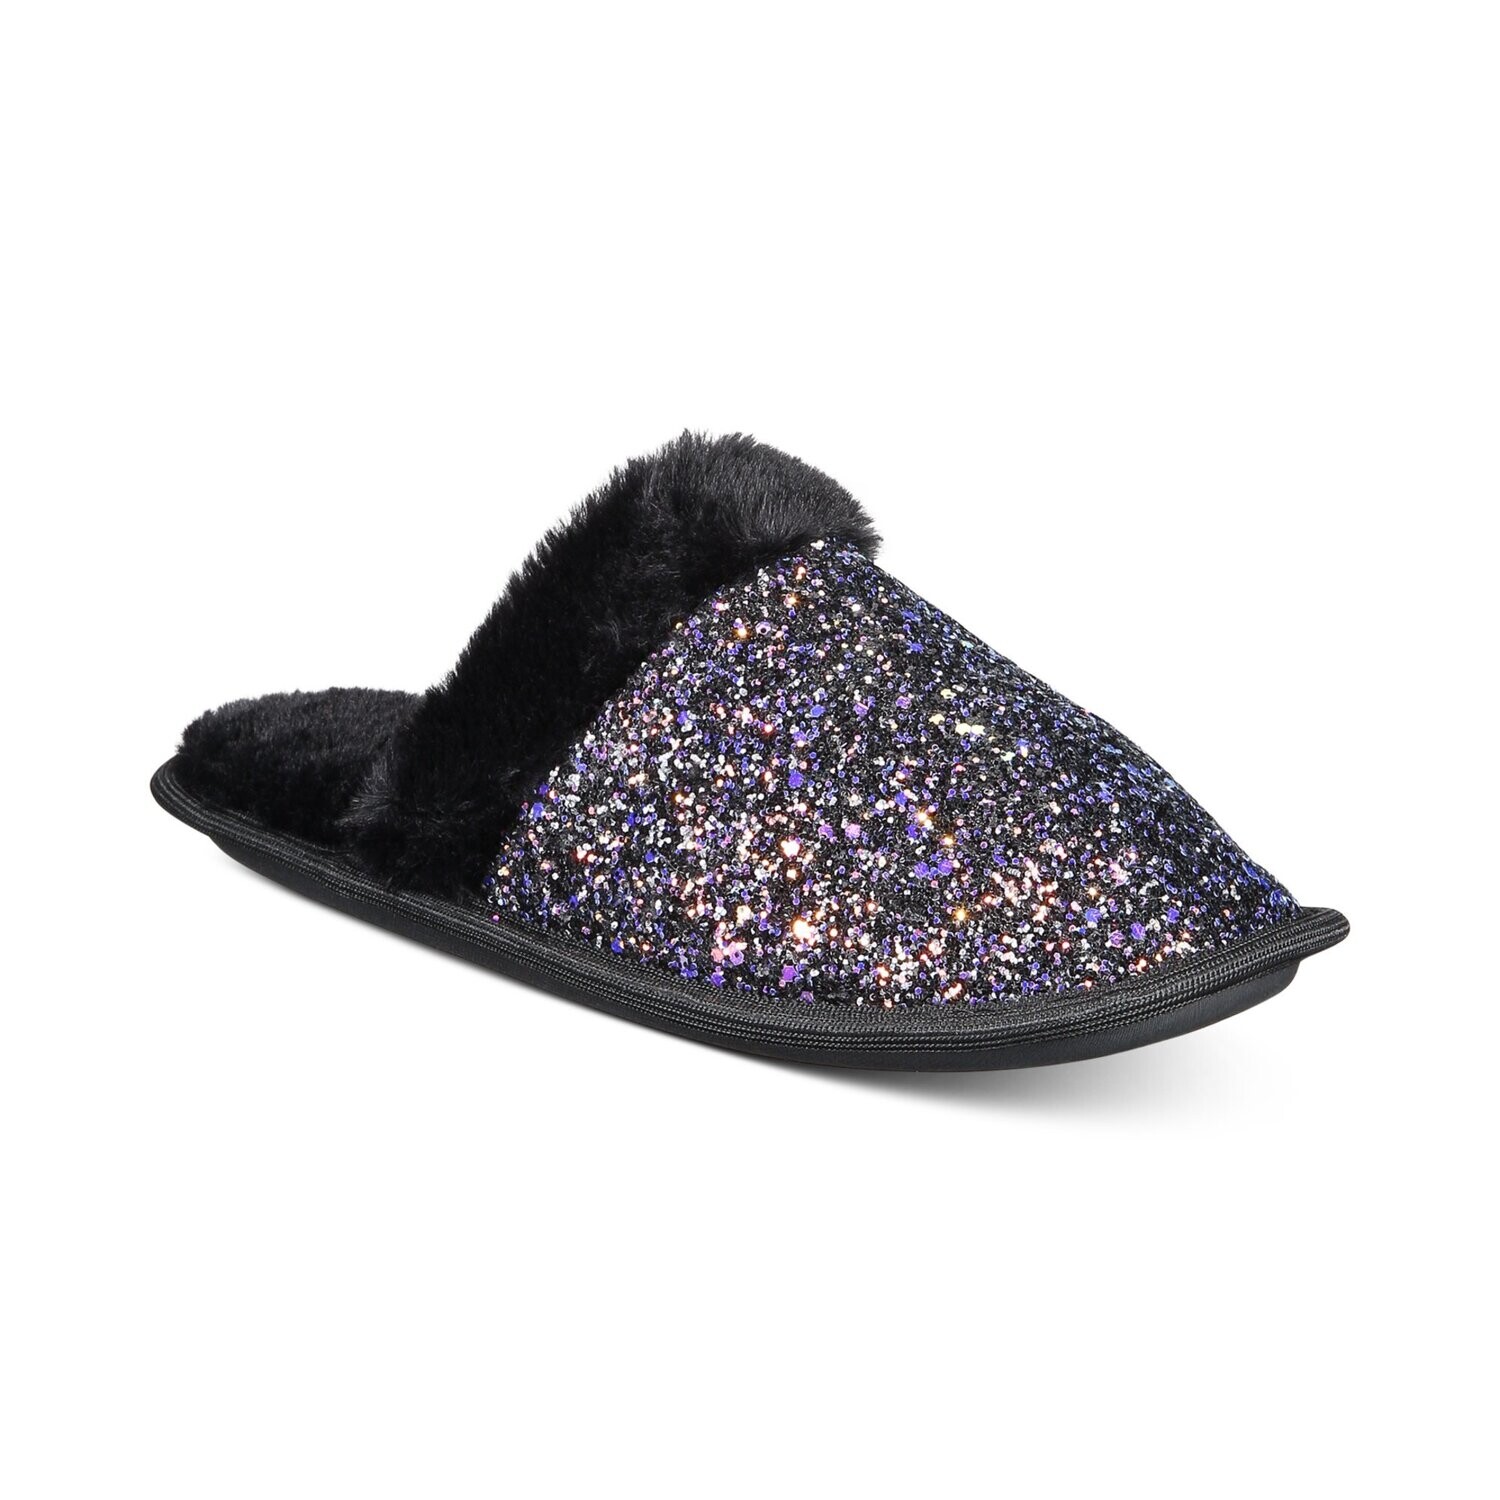 Jenni Women's Glitter Slippers with Faux-Fur Trim, Black, S (5-6)